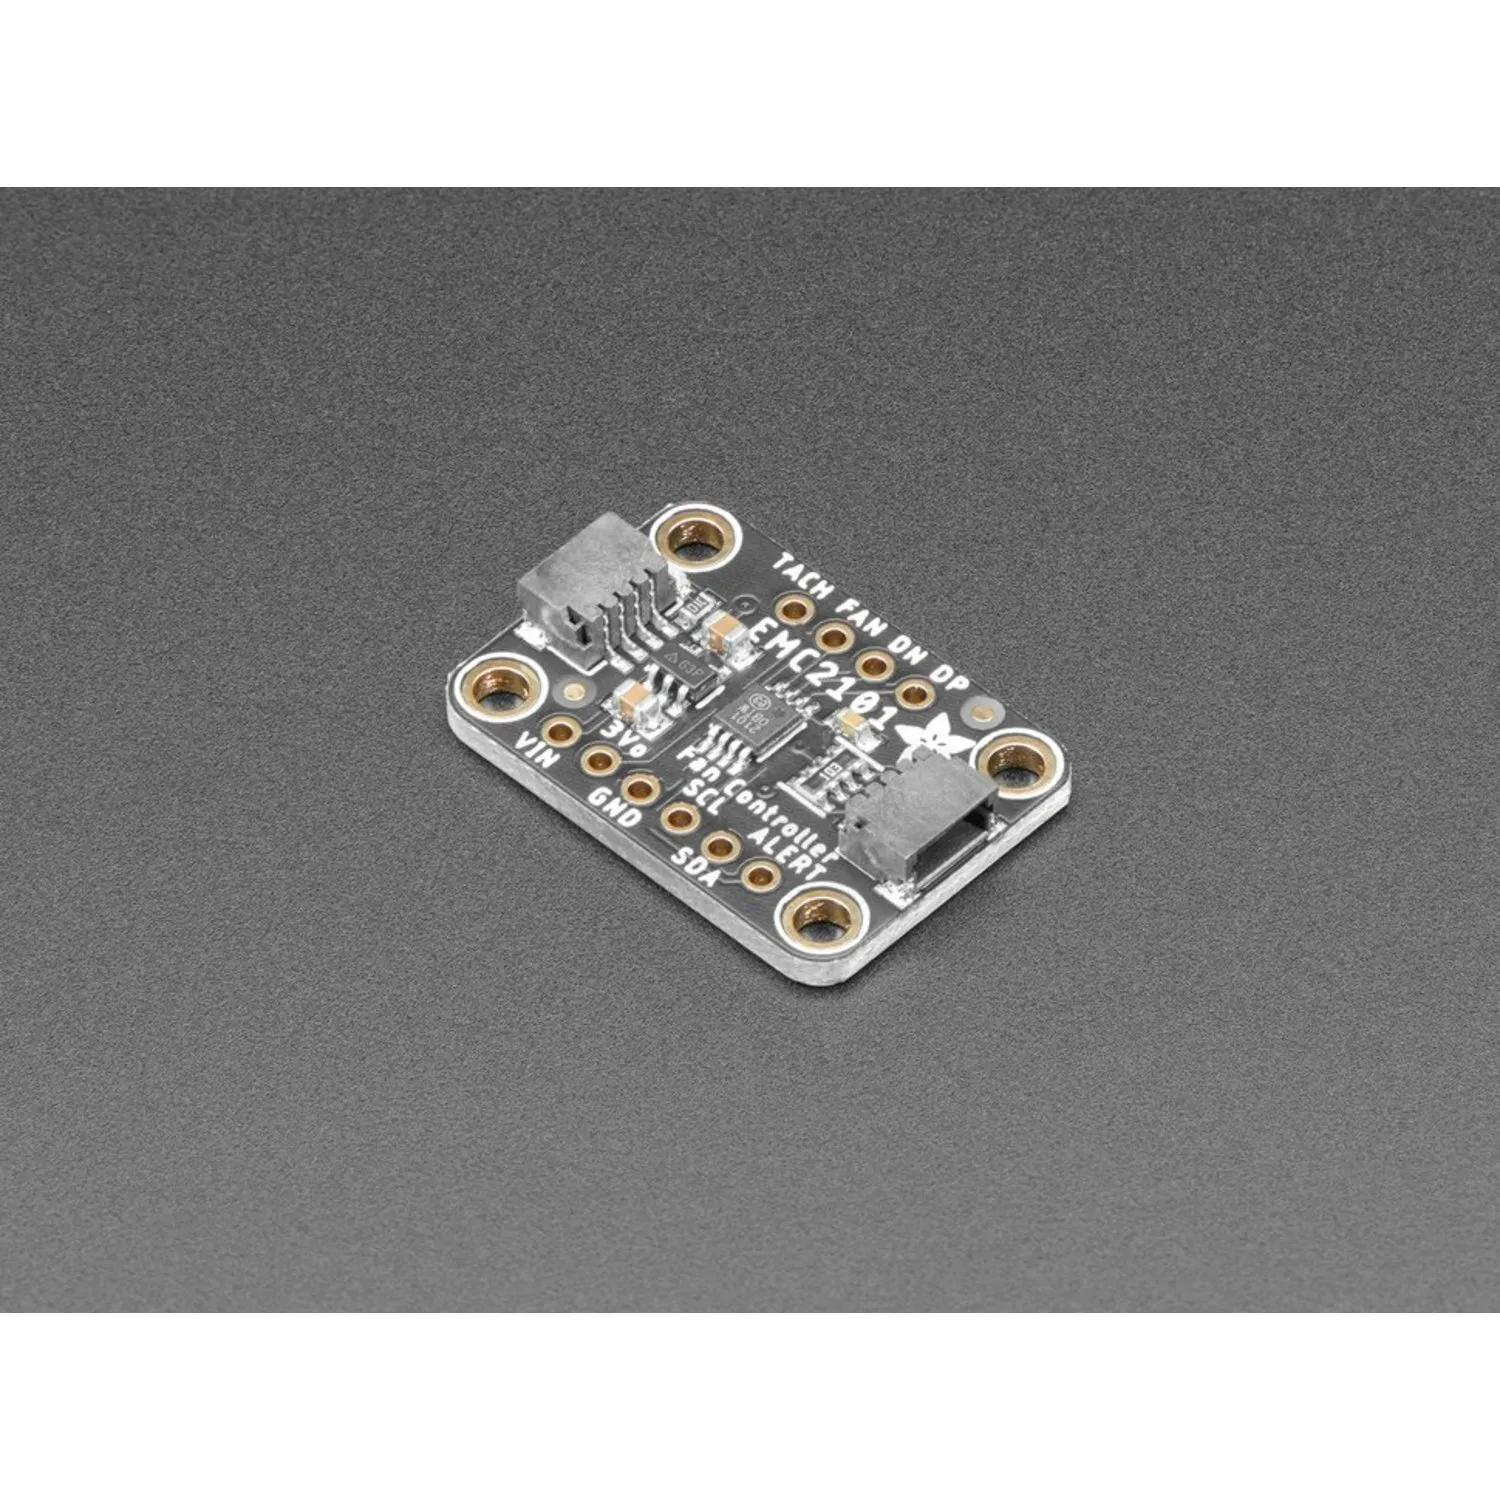 Photo of Adafruit EMC2101 I2C PC Fan Controller and Temperature Sensor - STEMMA QT / Qwiic